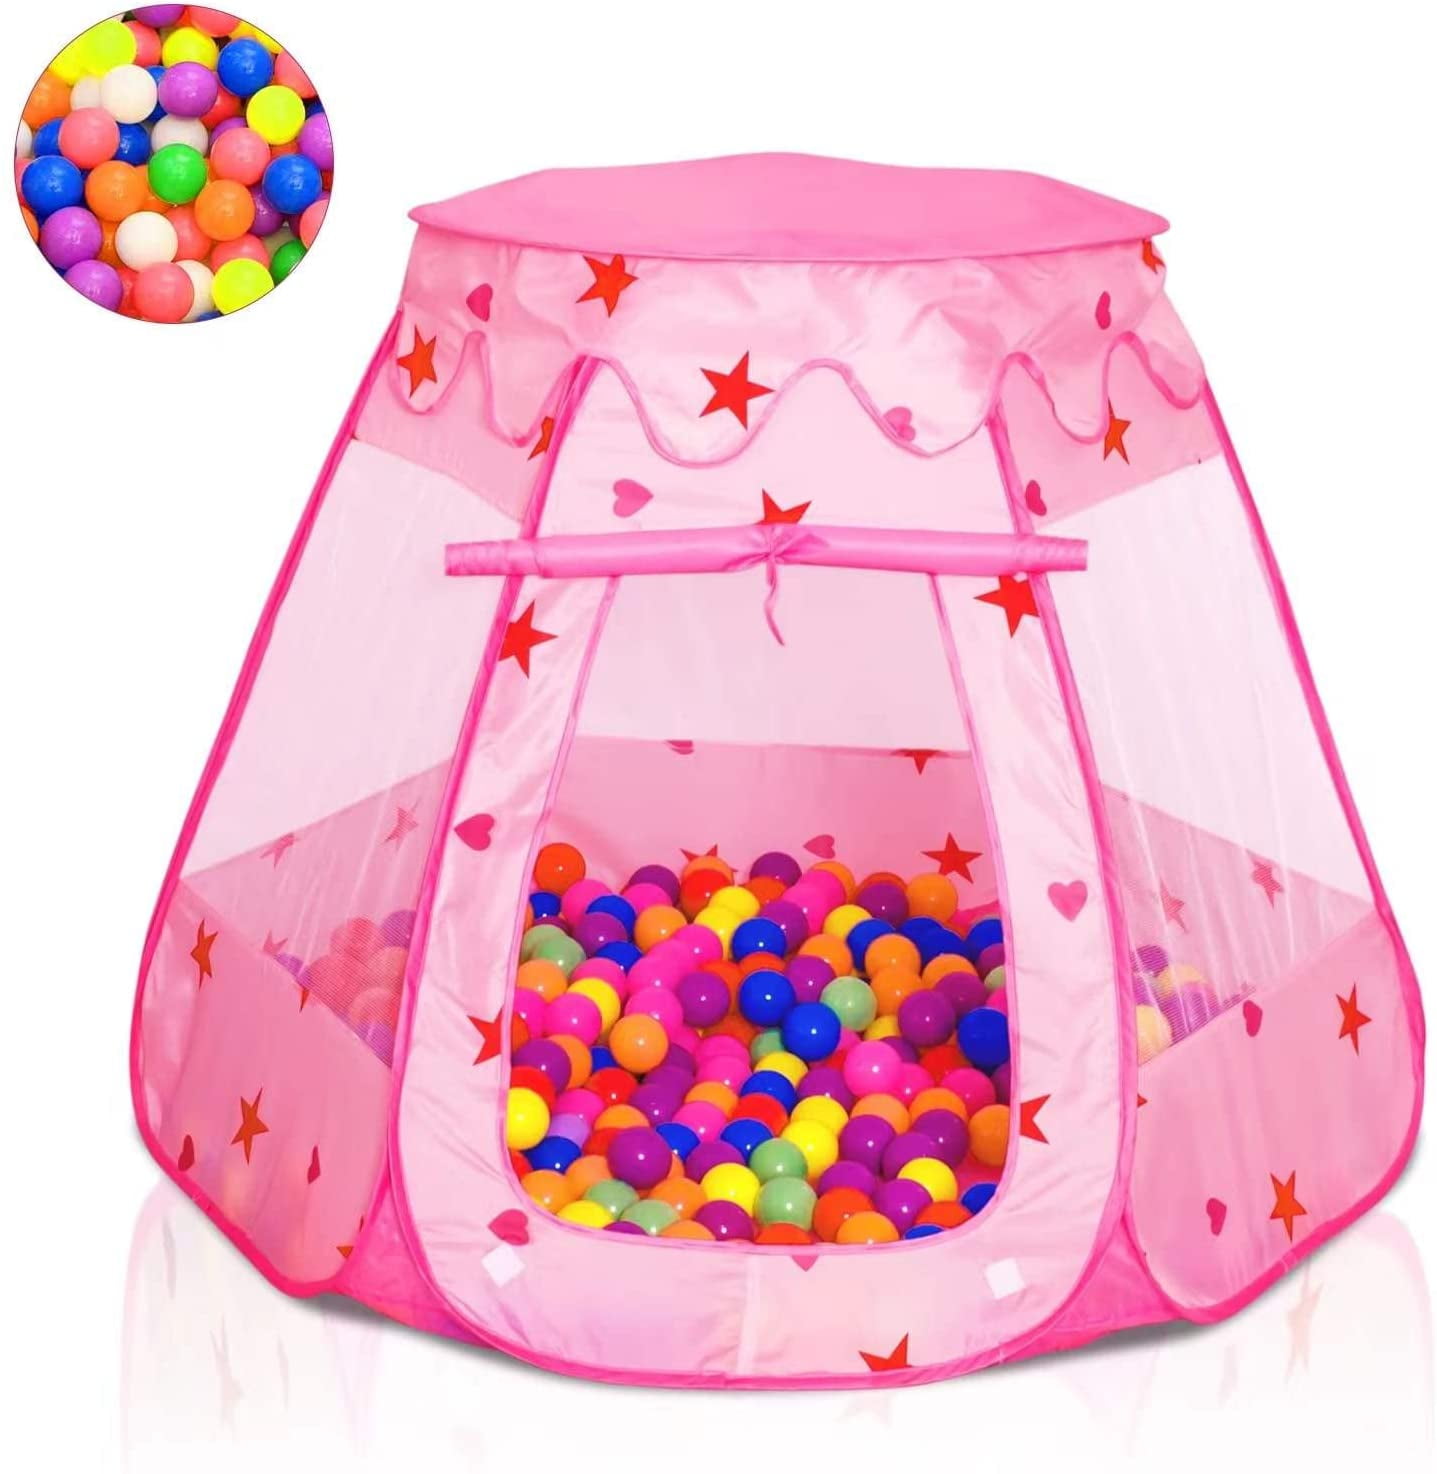 Gift For Toddler Girl Pink Princess Play Tent Kids Ball Pit Christmas SALE NEW 